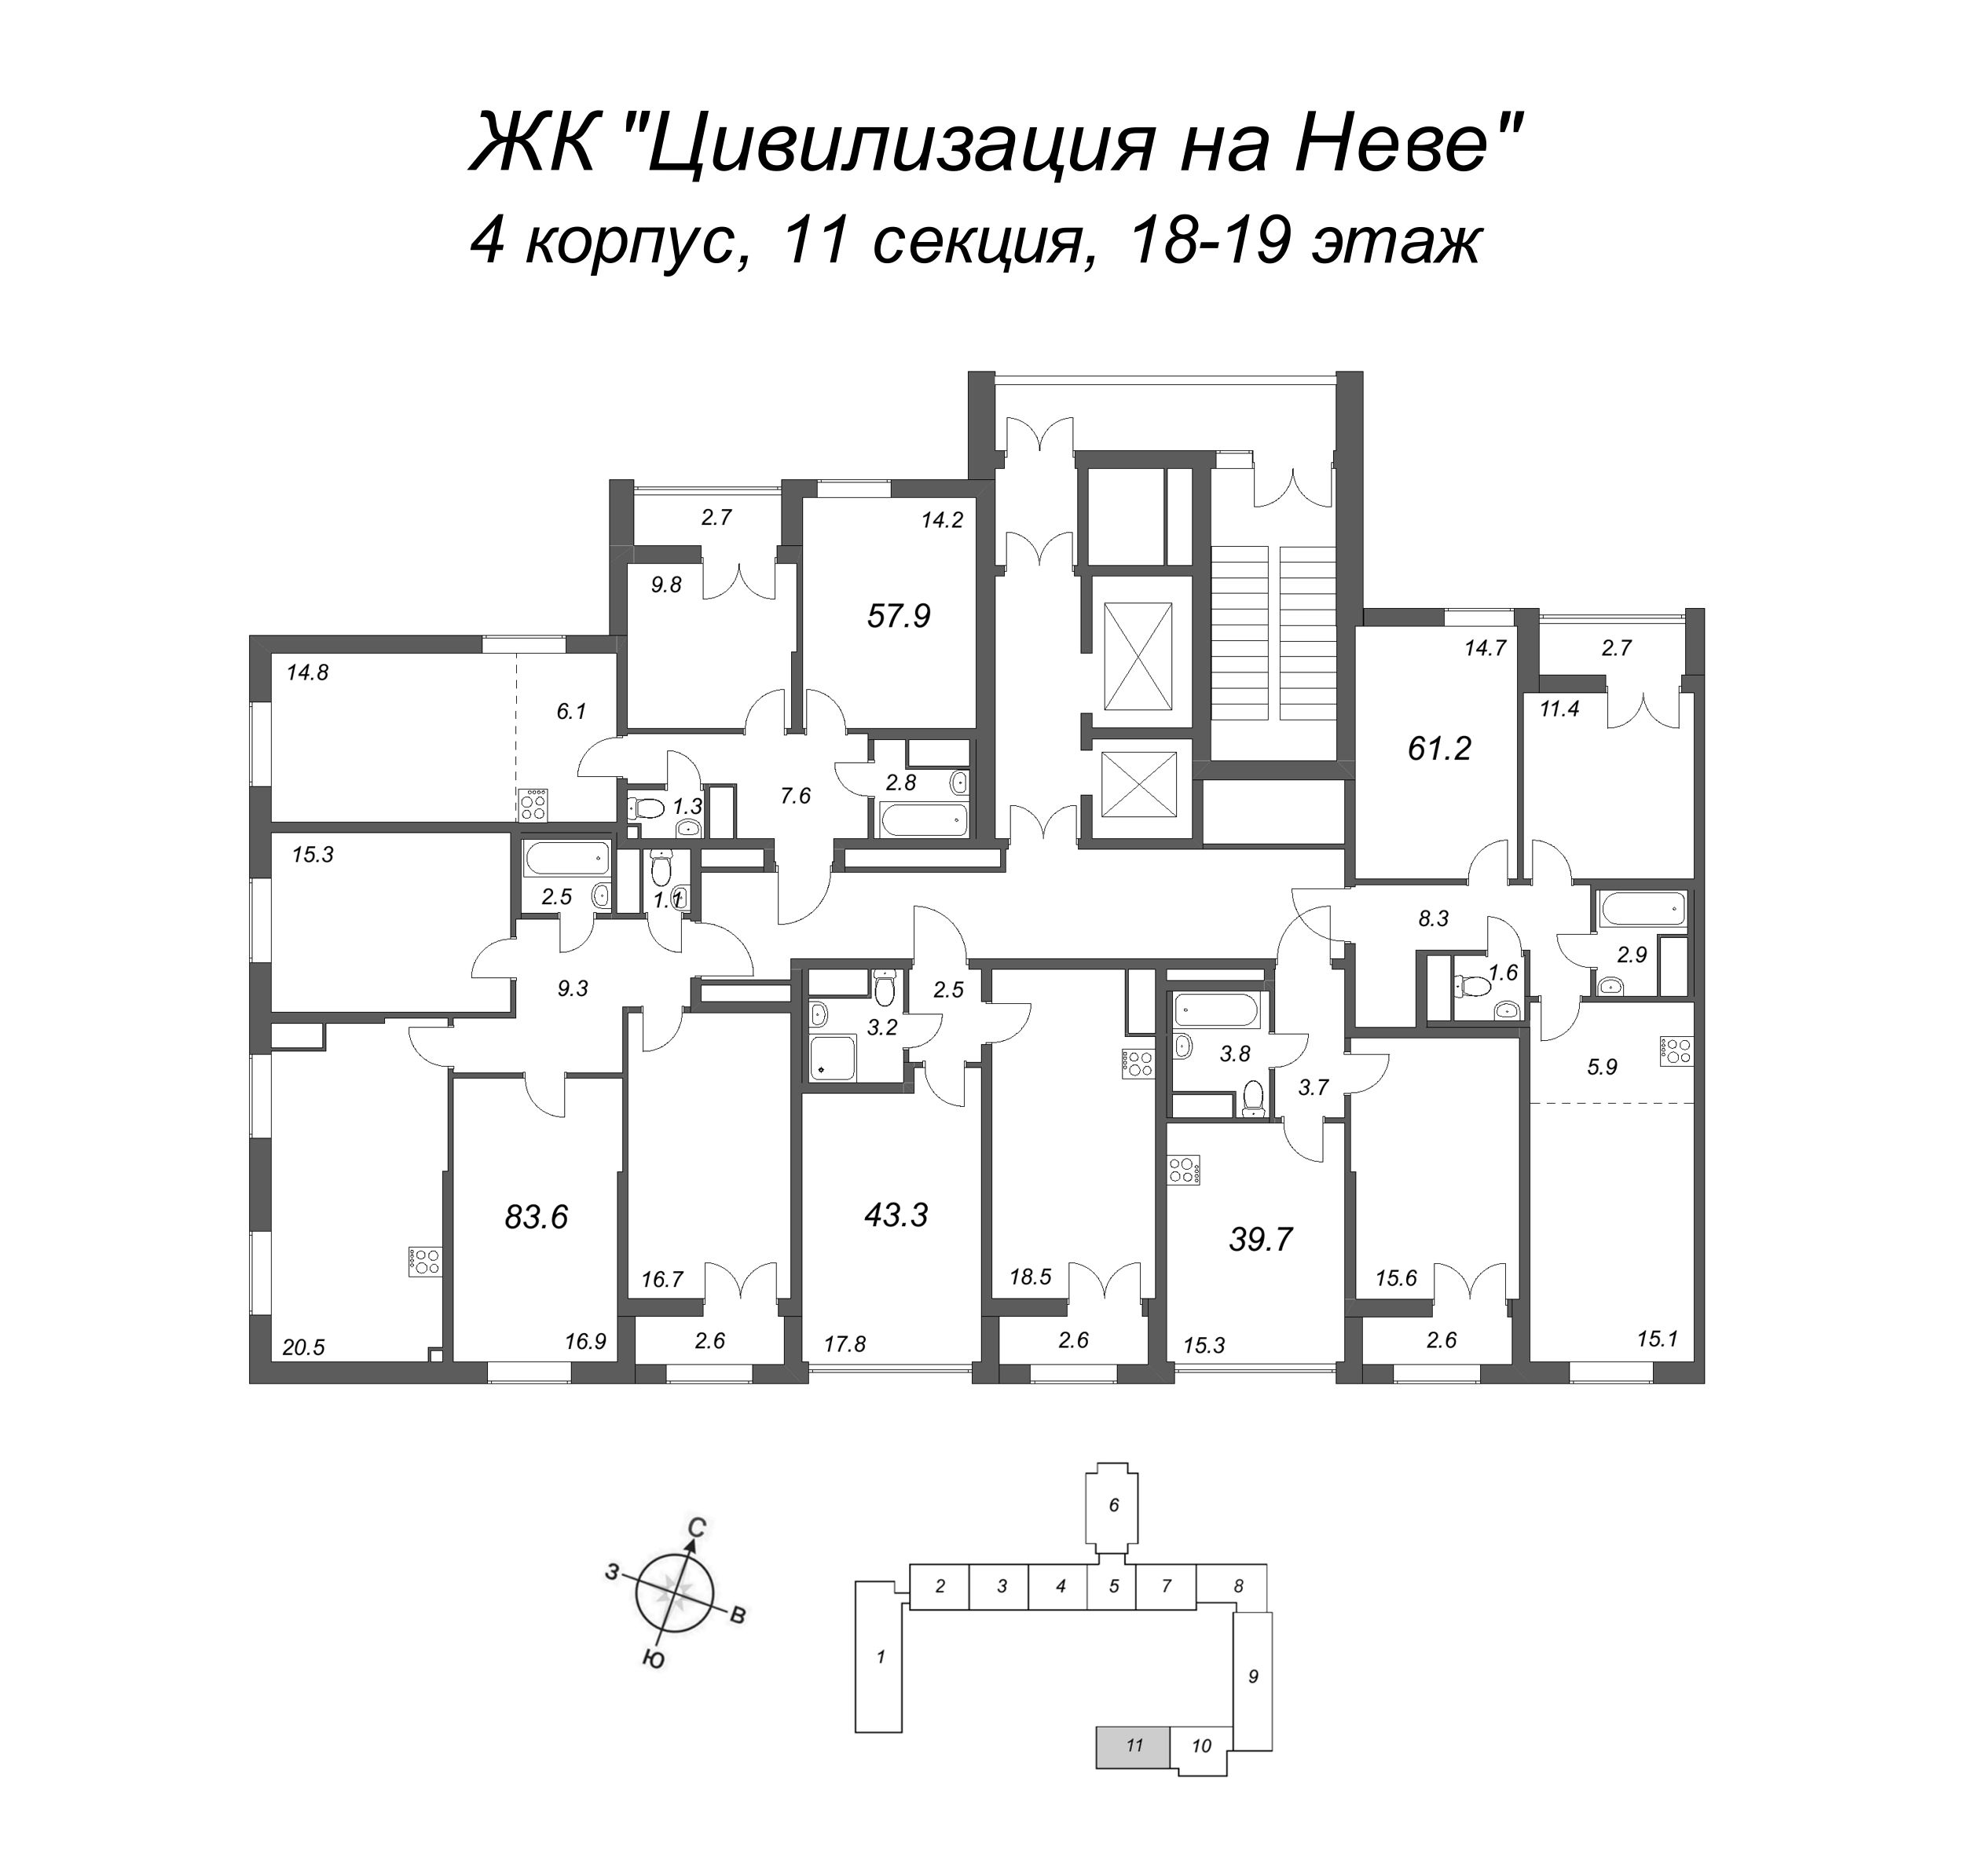 3-комнатная (Евро) квартира, 61.2 м² - планировка этажа